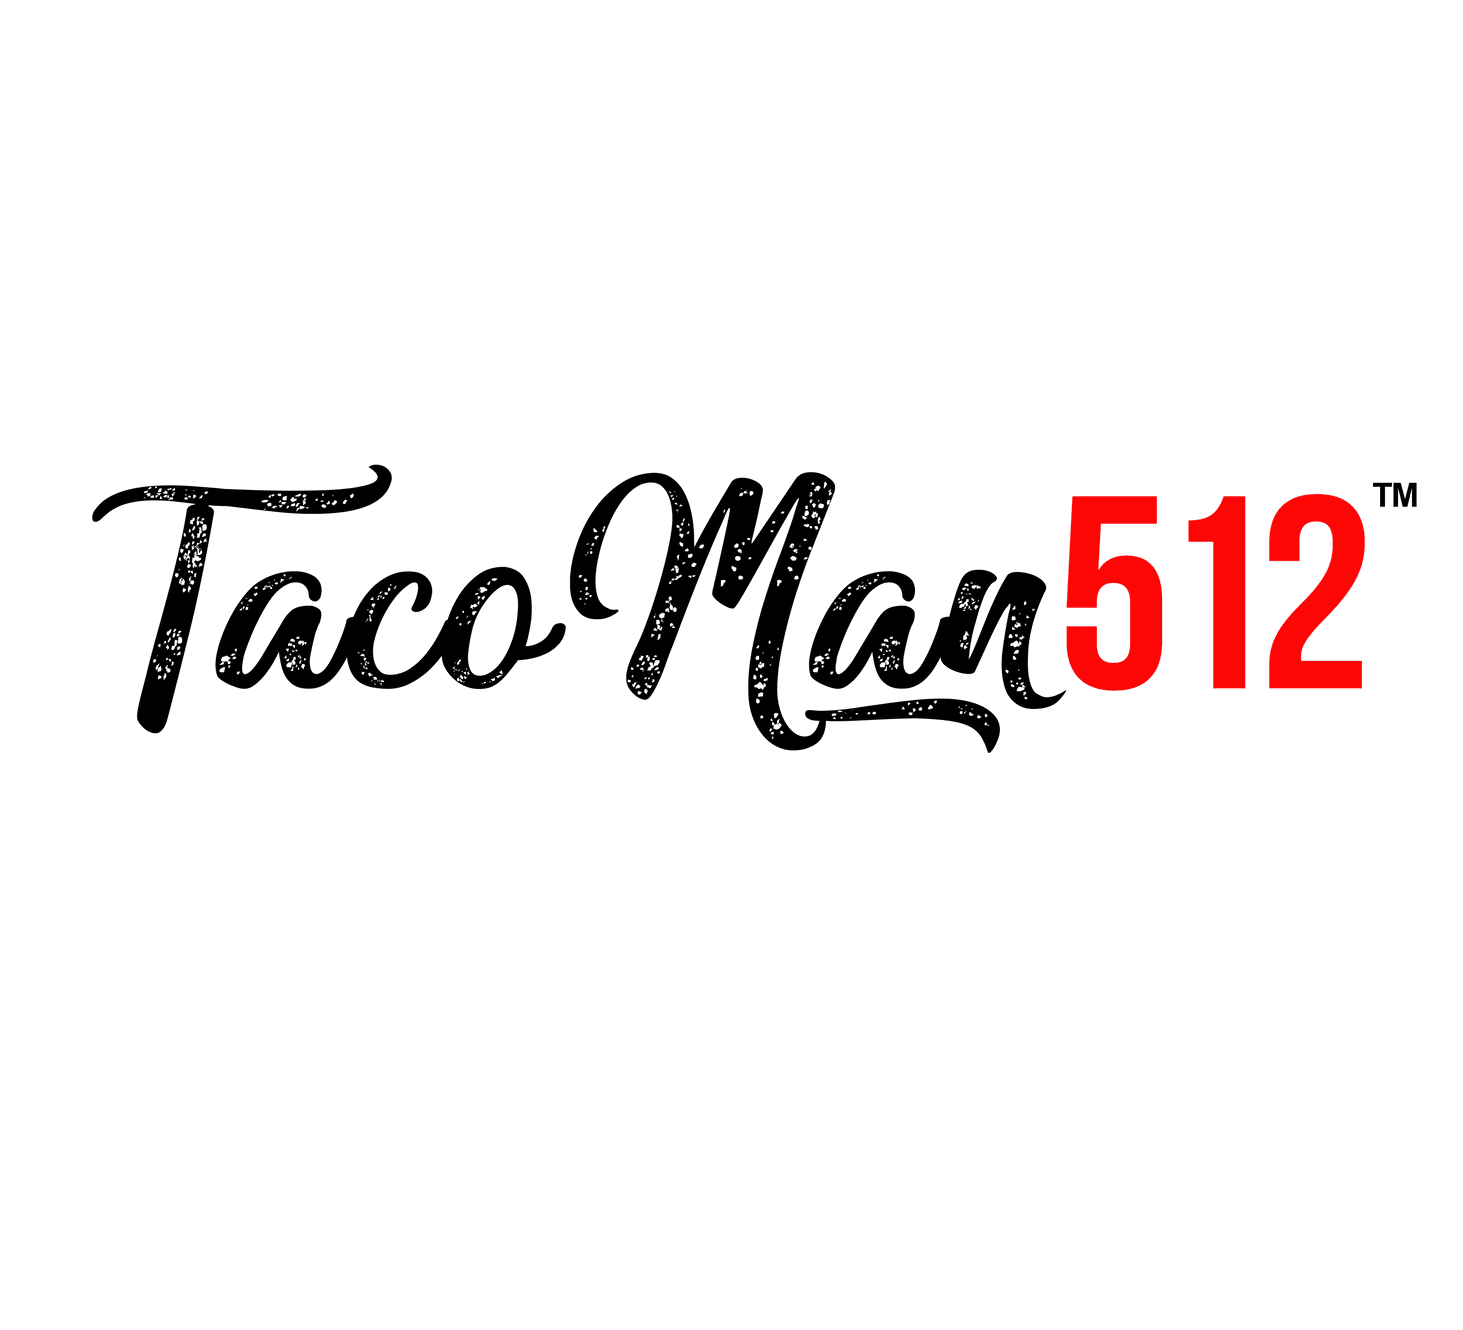 tacoman 512 logo